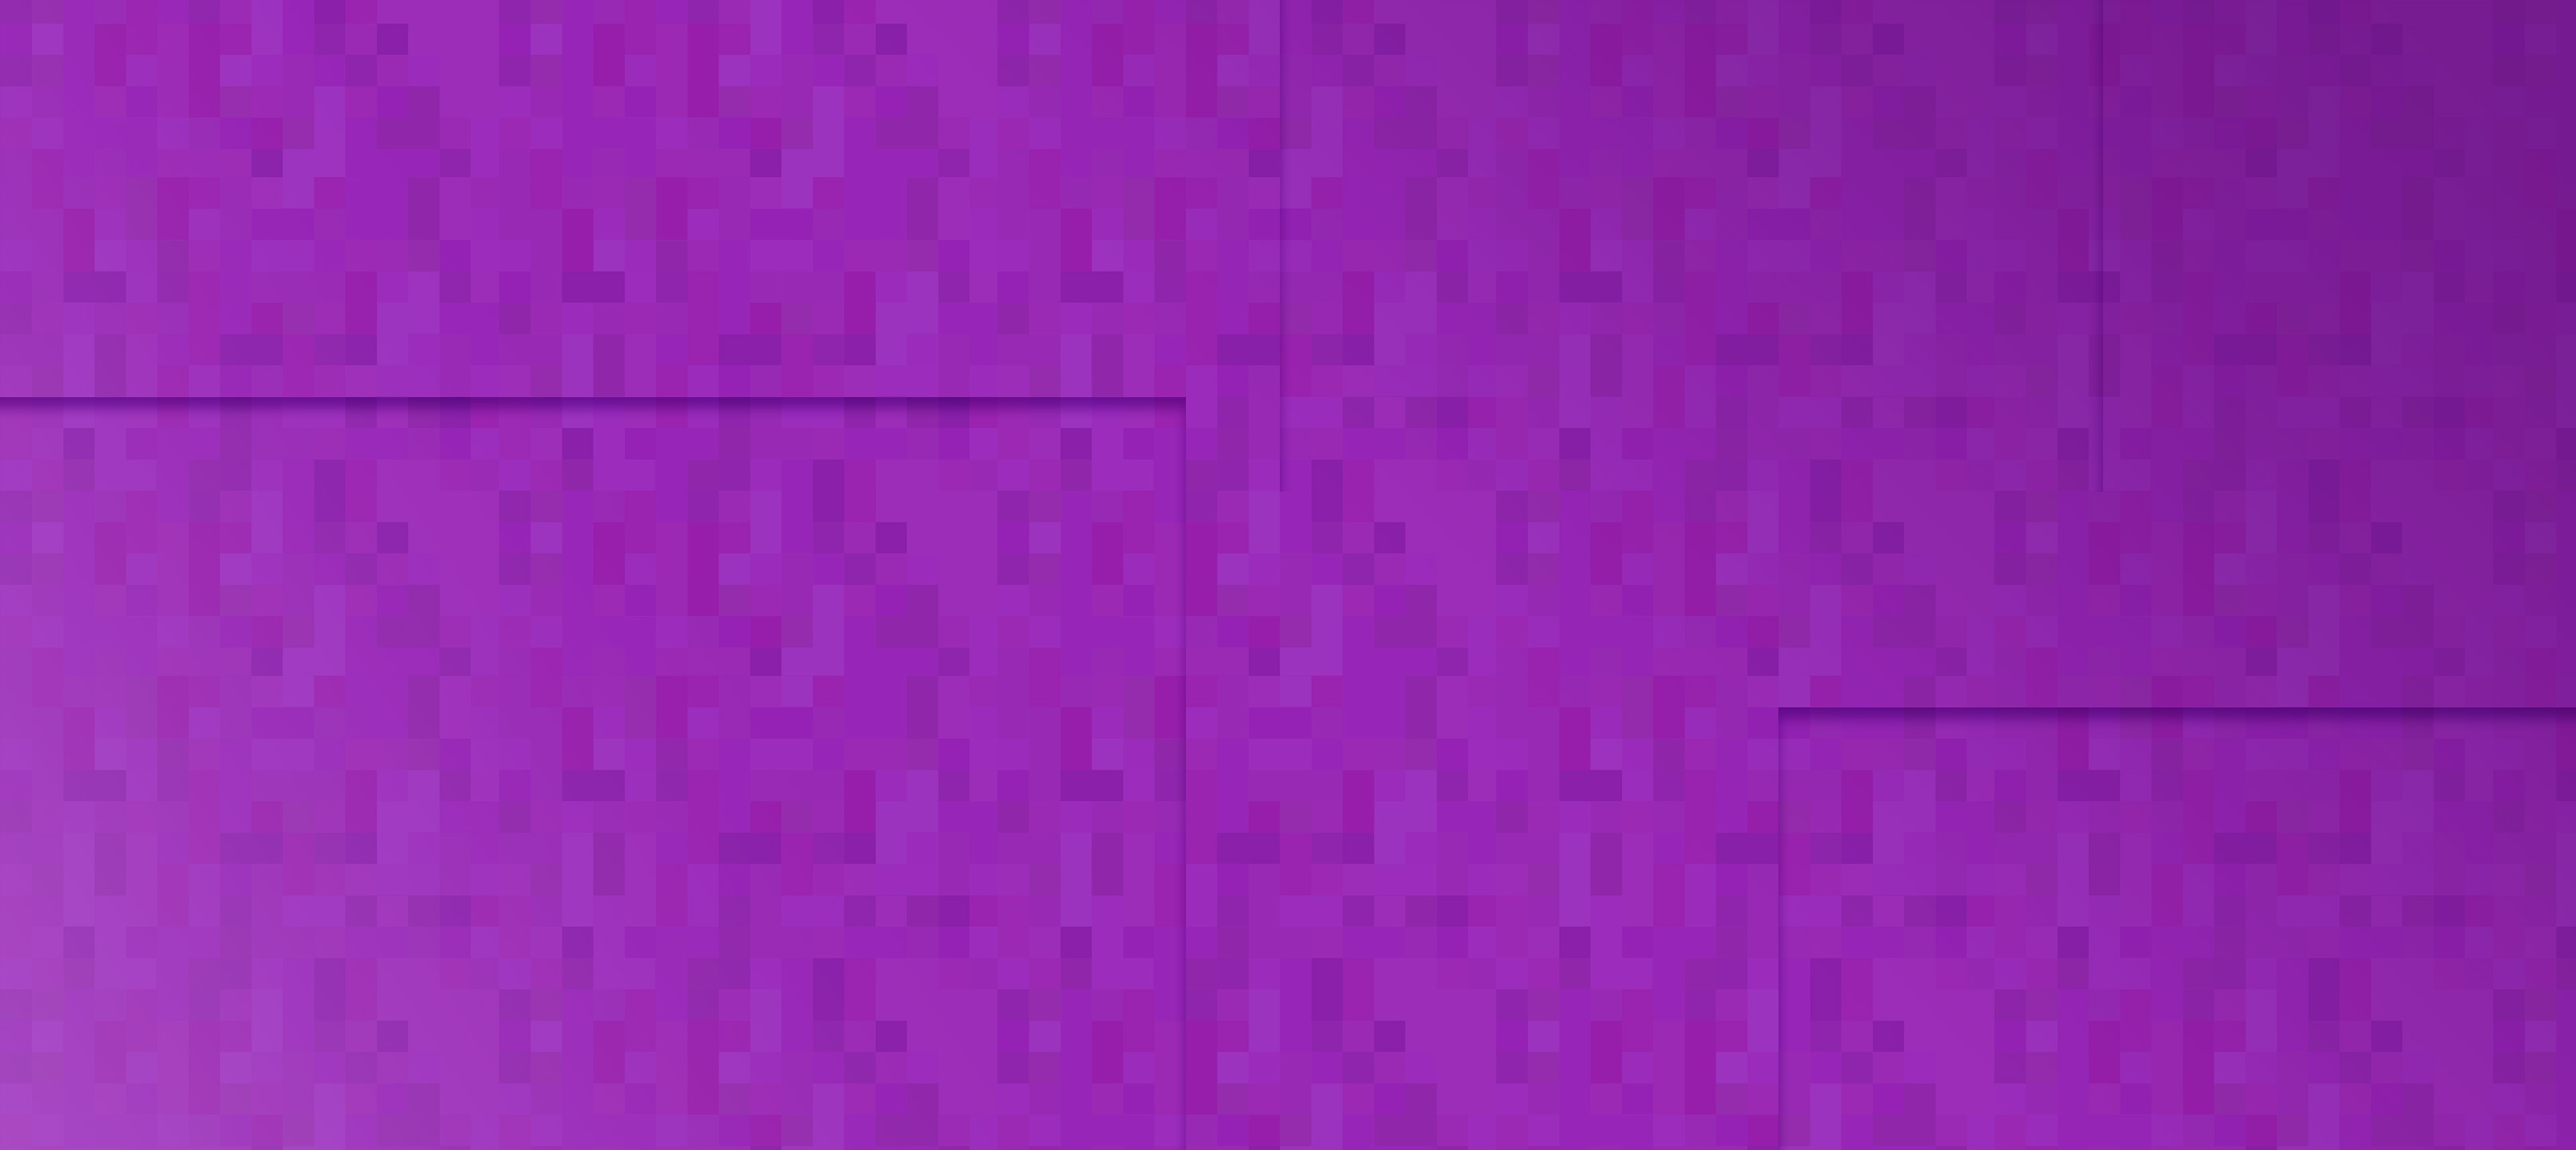 Pixel Art - Textured Background